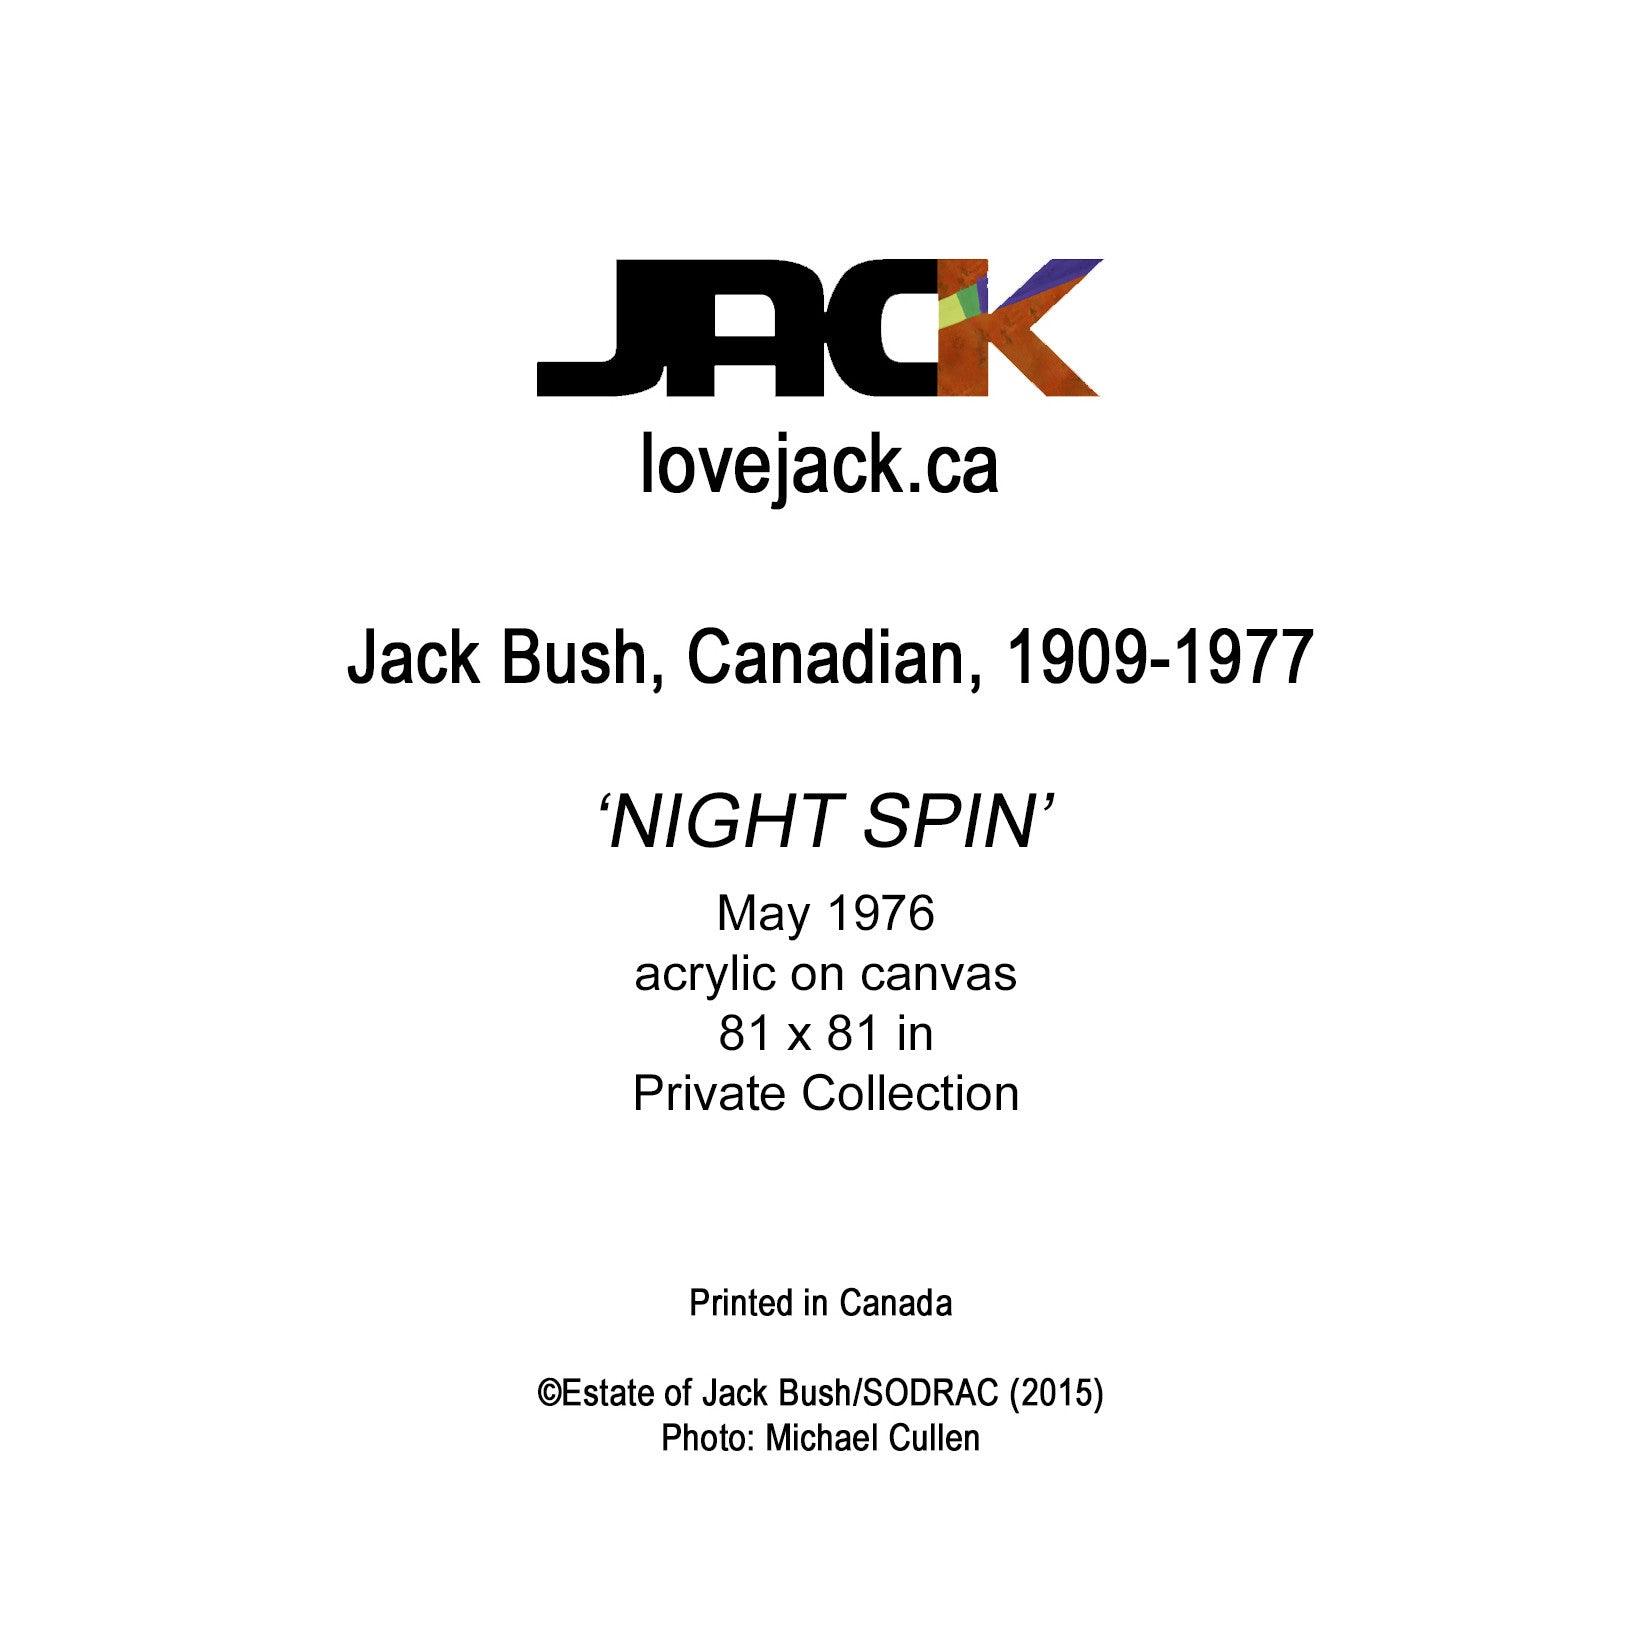 Night Spin - JACK